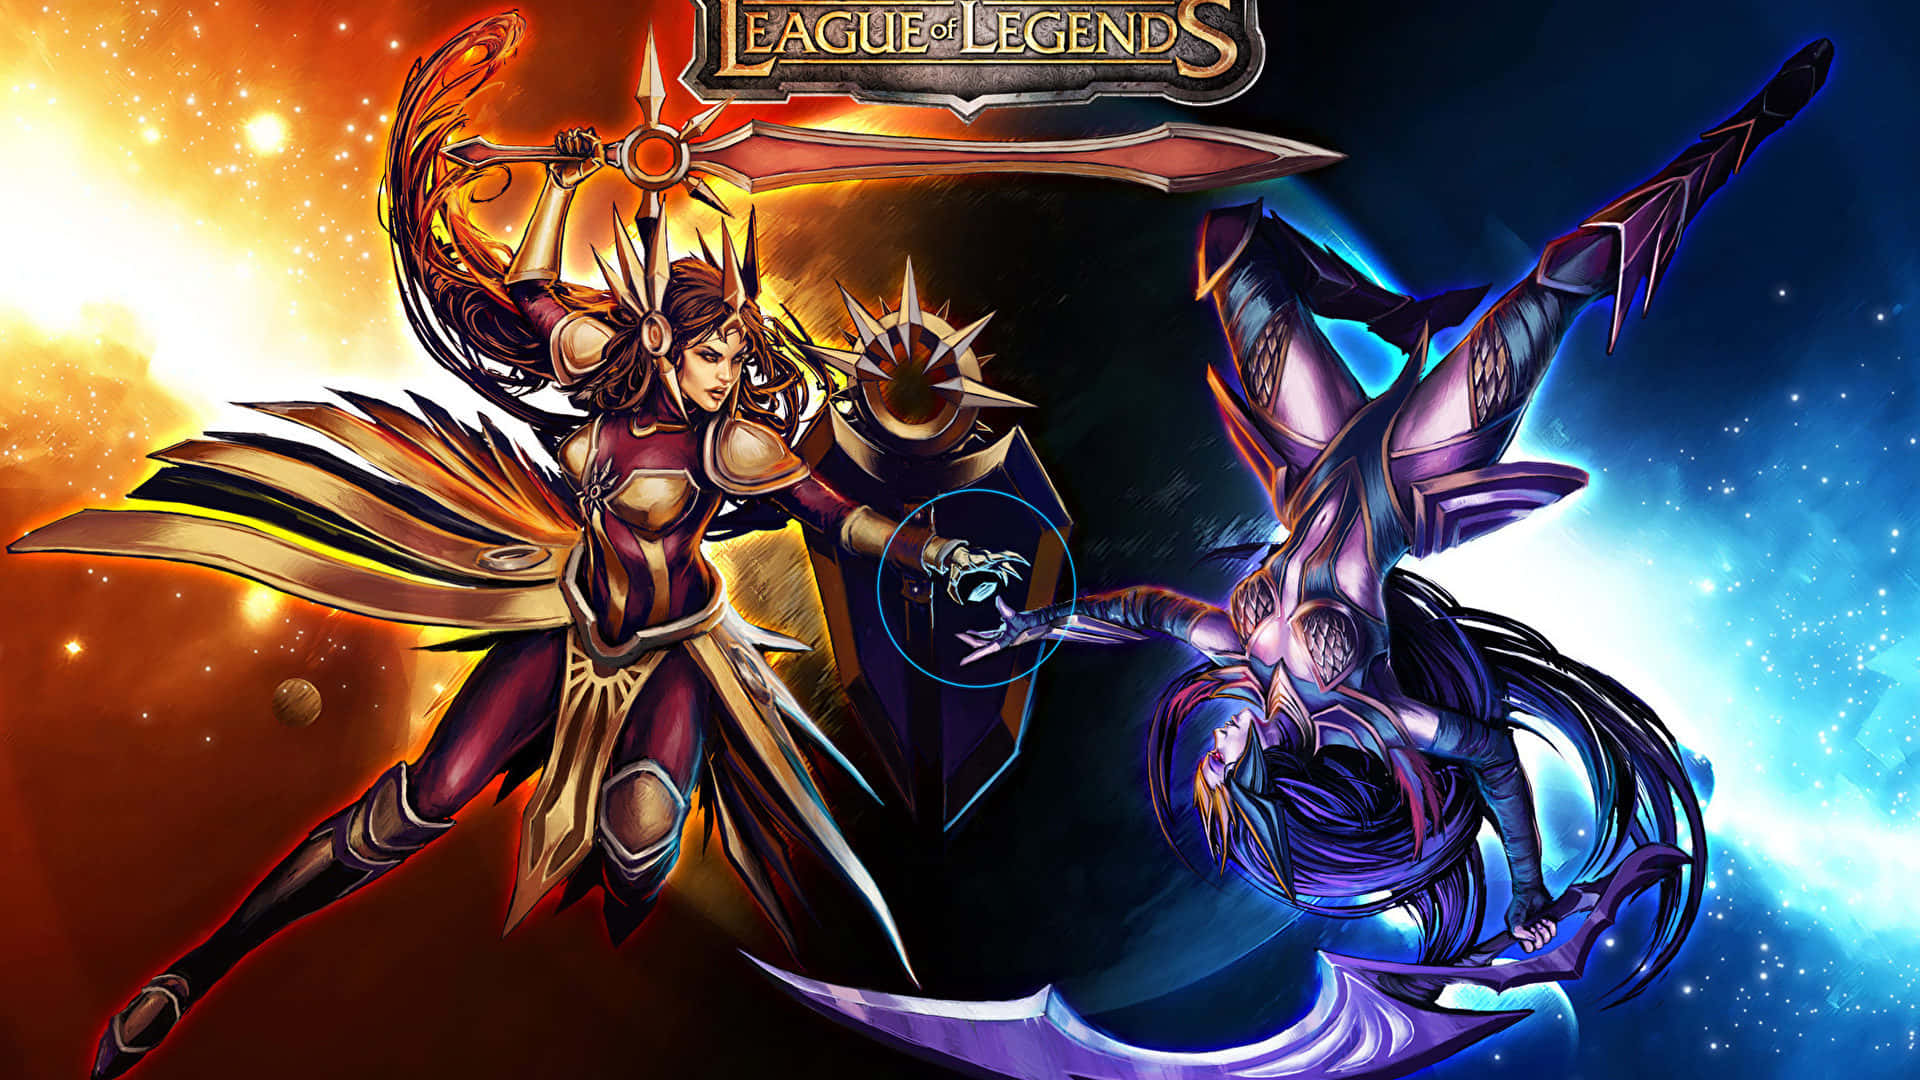 Personalizatu Computadora Portátil Con El Icónico Logo De League Of Legends. Fondo de pantalla